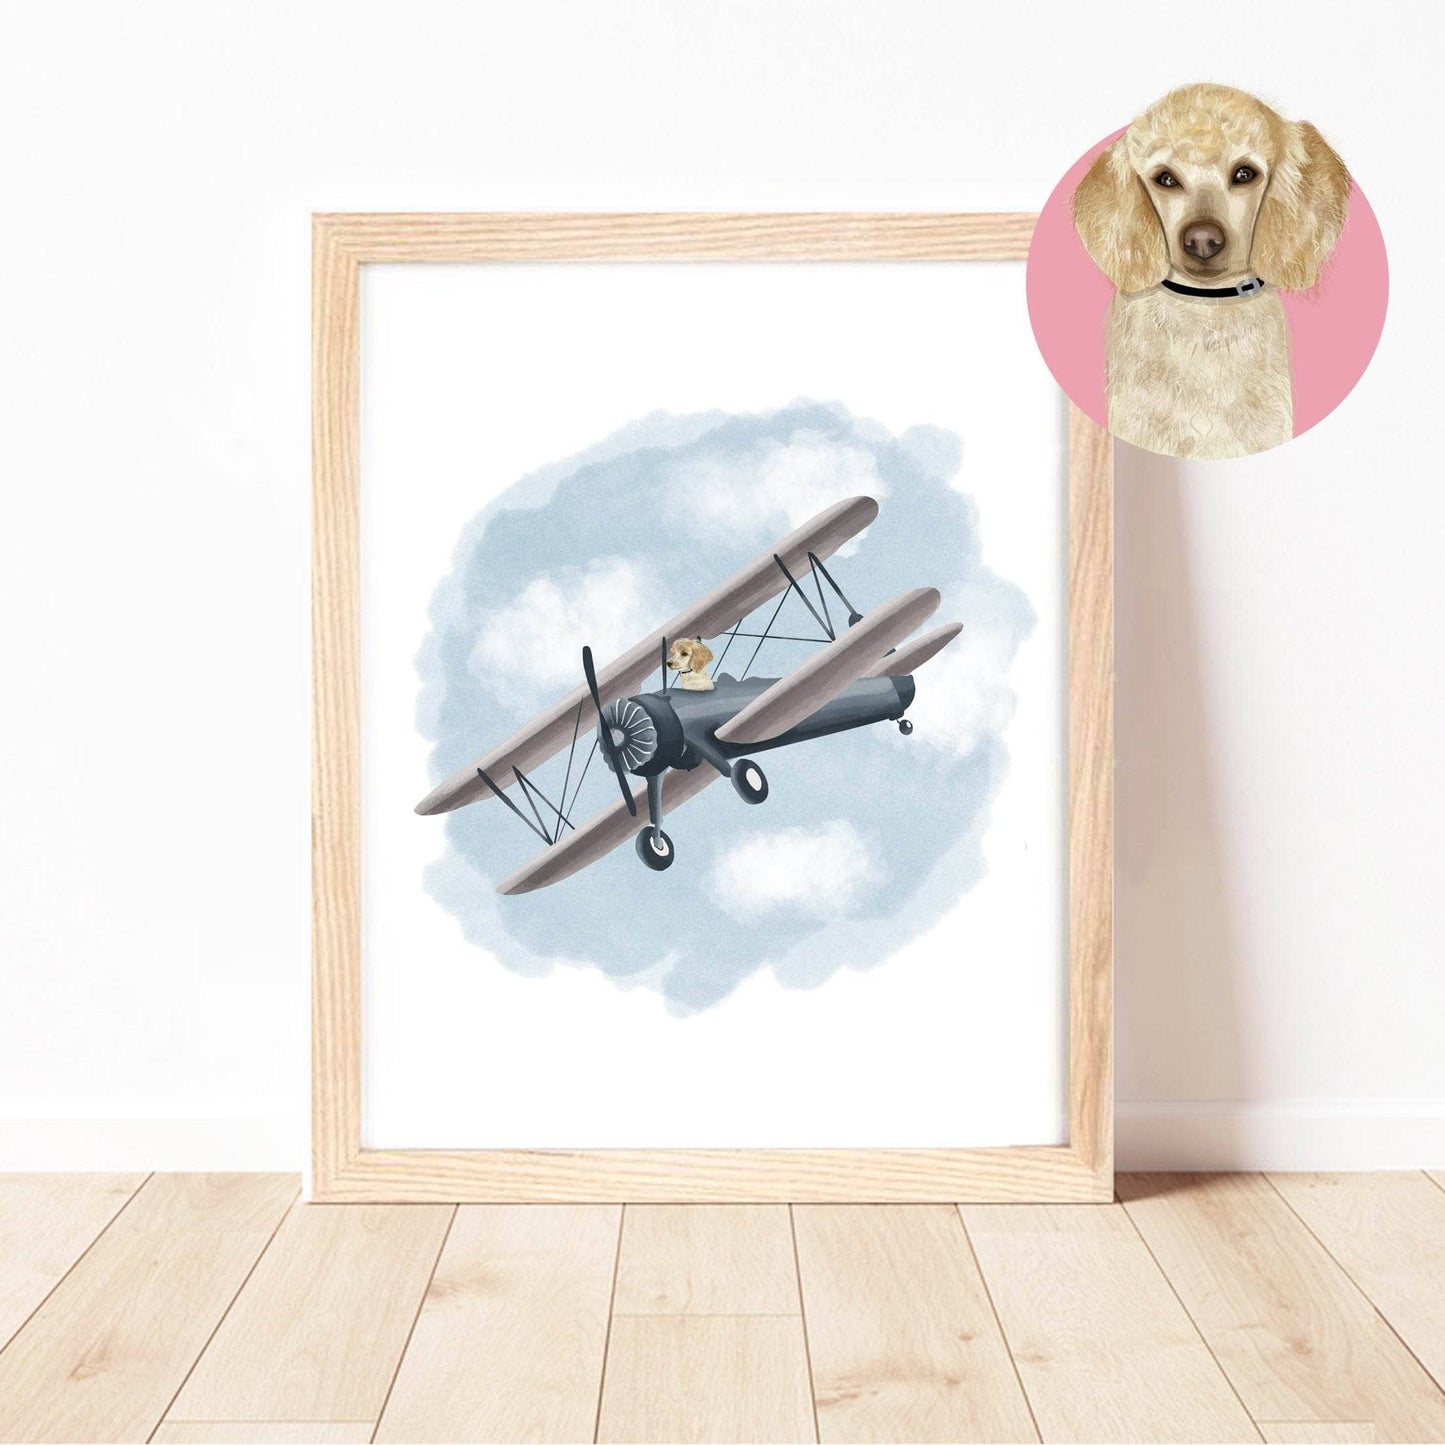 Dogs on Adventures Wall Art Print | Plane